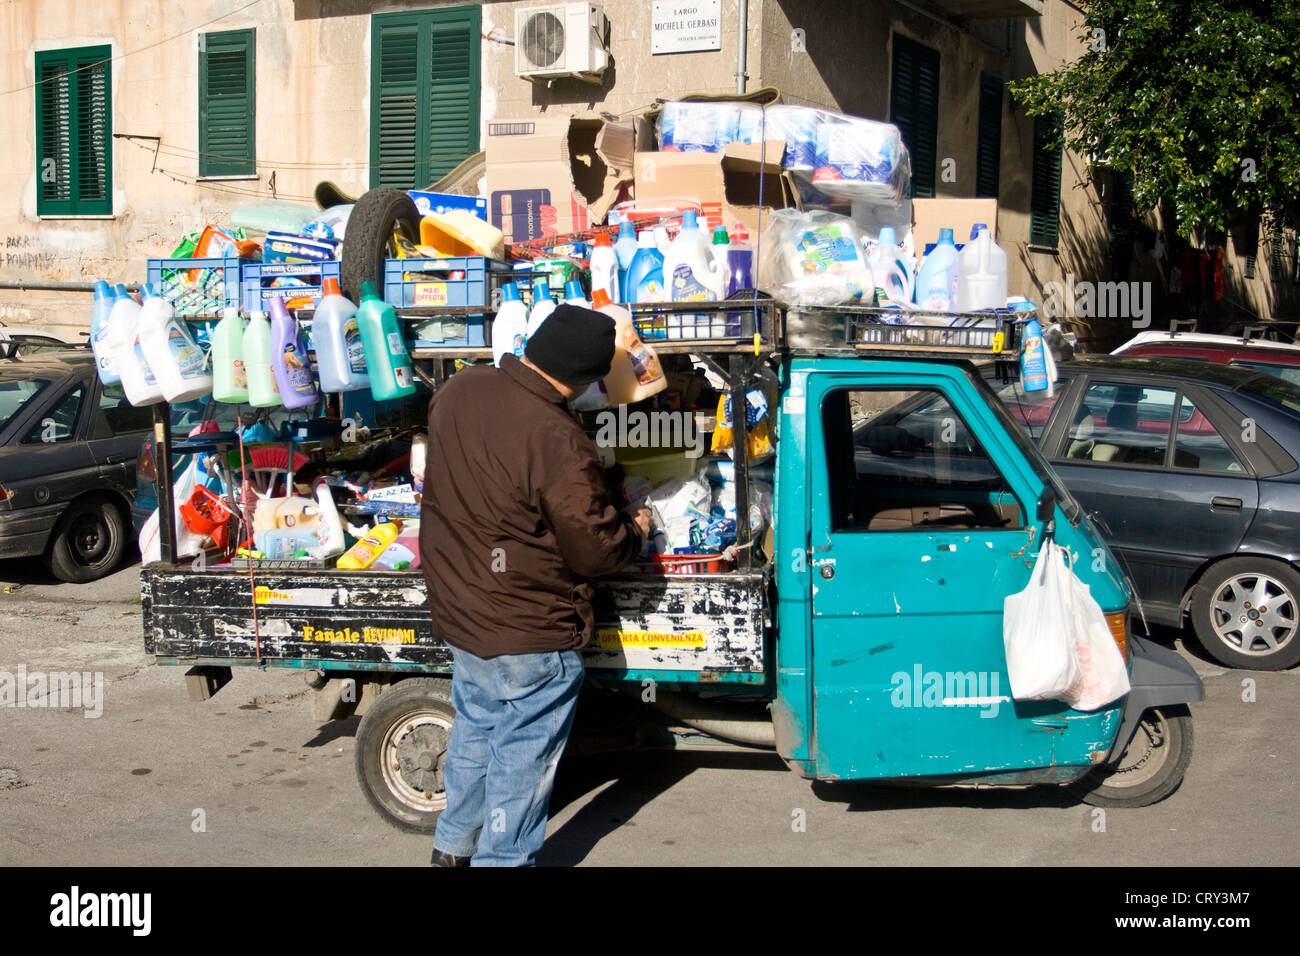 Street scene: man selling goods in a mini van Piaggio Ape, Palermo, Sicily,  Italy Stock Photo - Alamy